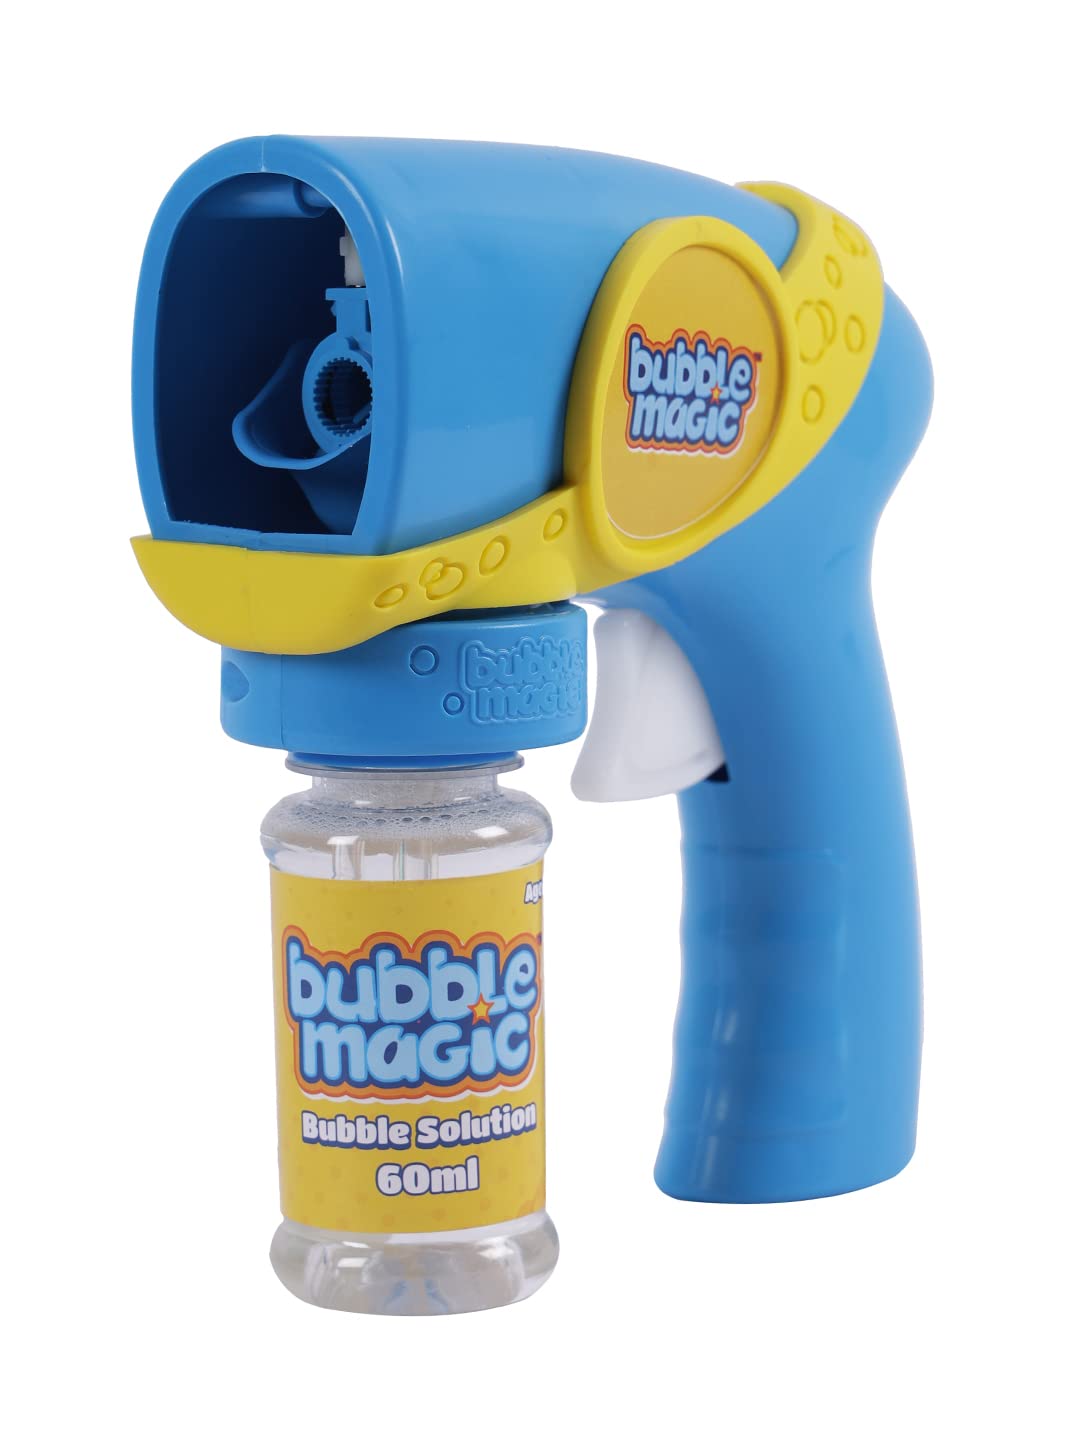 Bubble Magic Turbo Powered Bubble Blaster Includes Bubble Solution Bottle